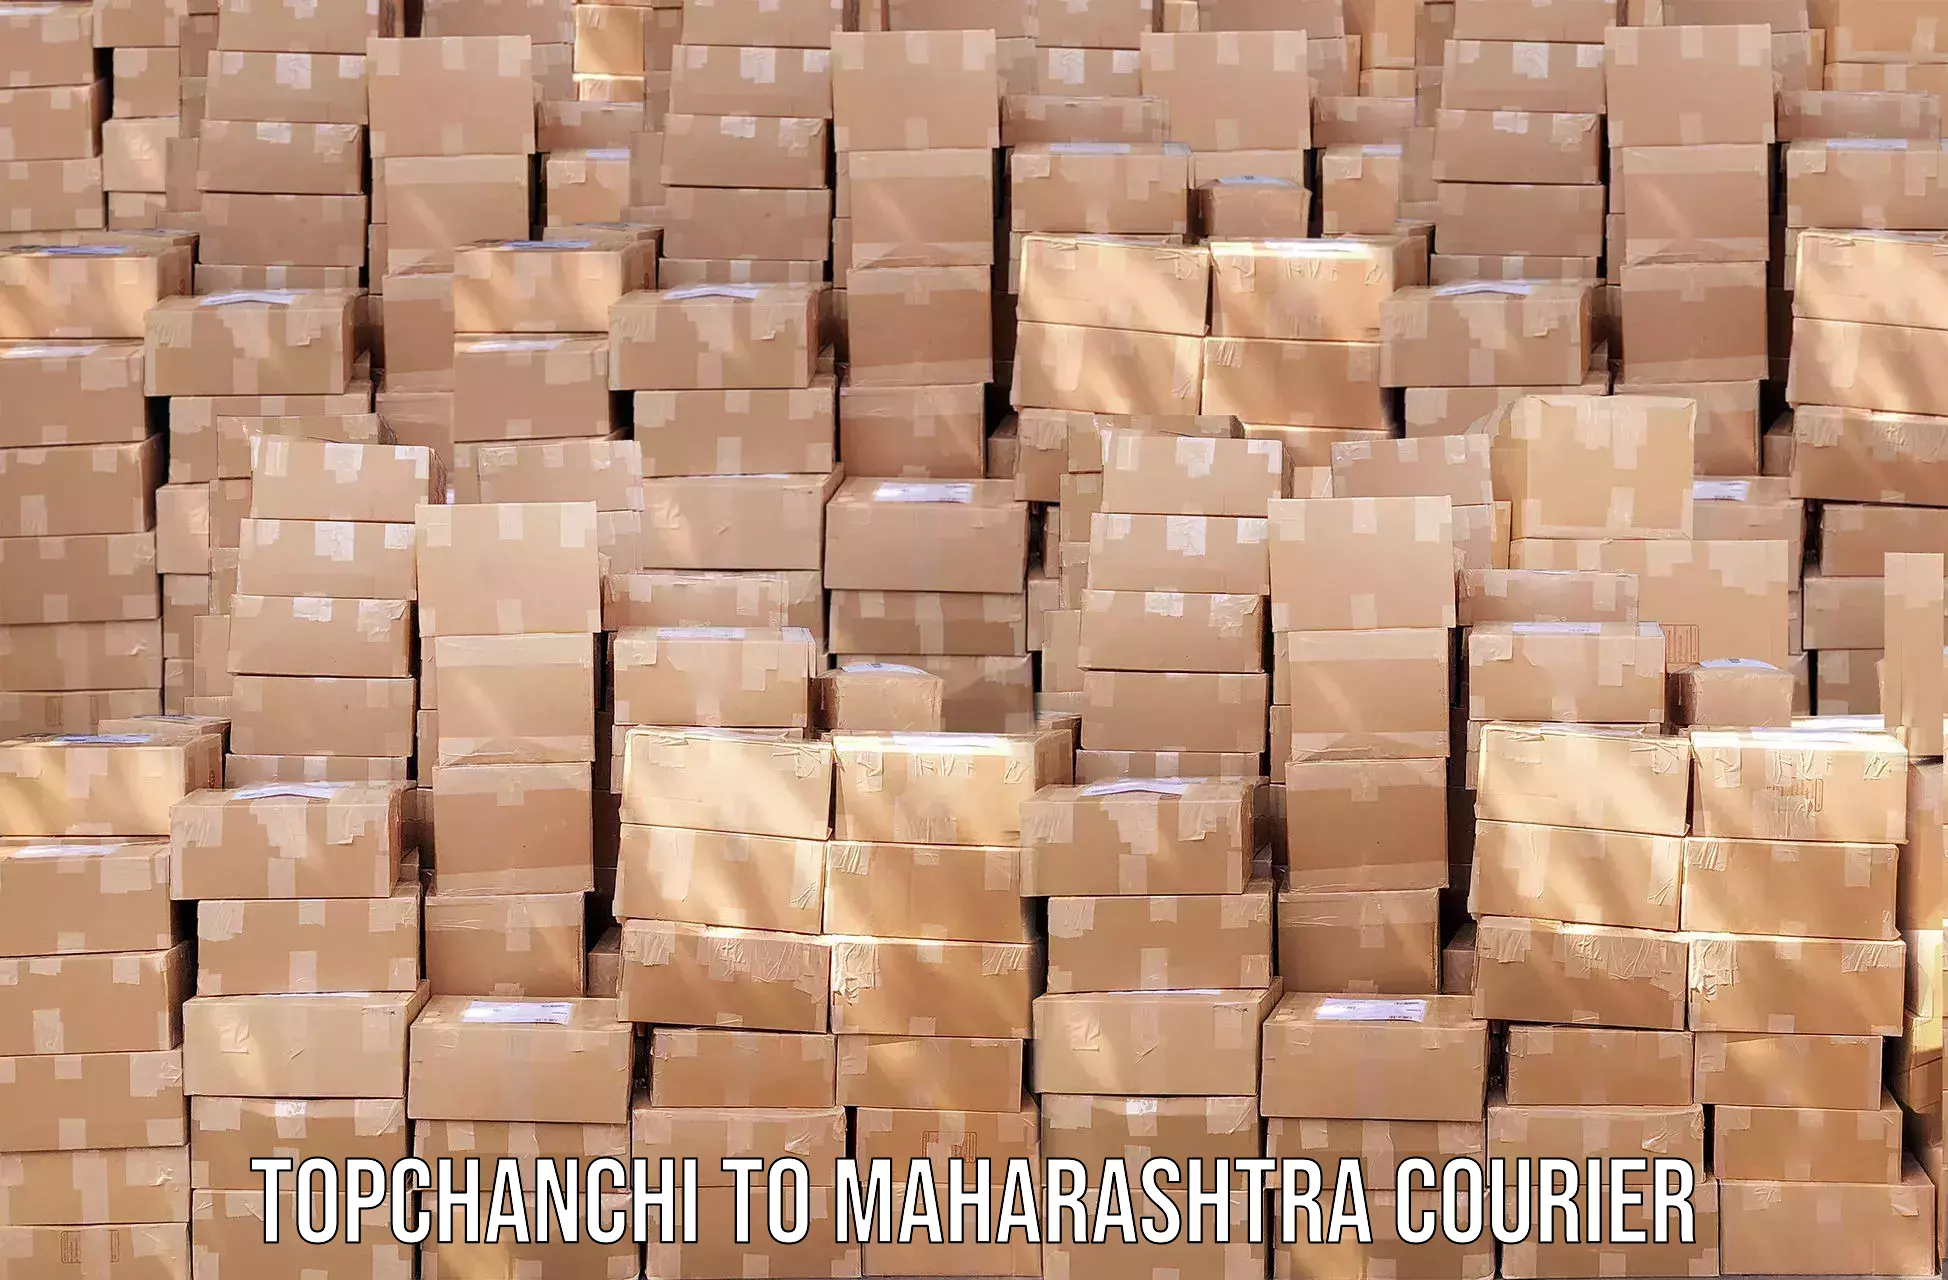 Courier insurance Topchanchi to Mahad